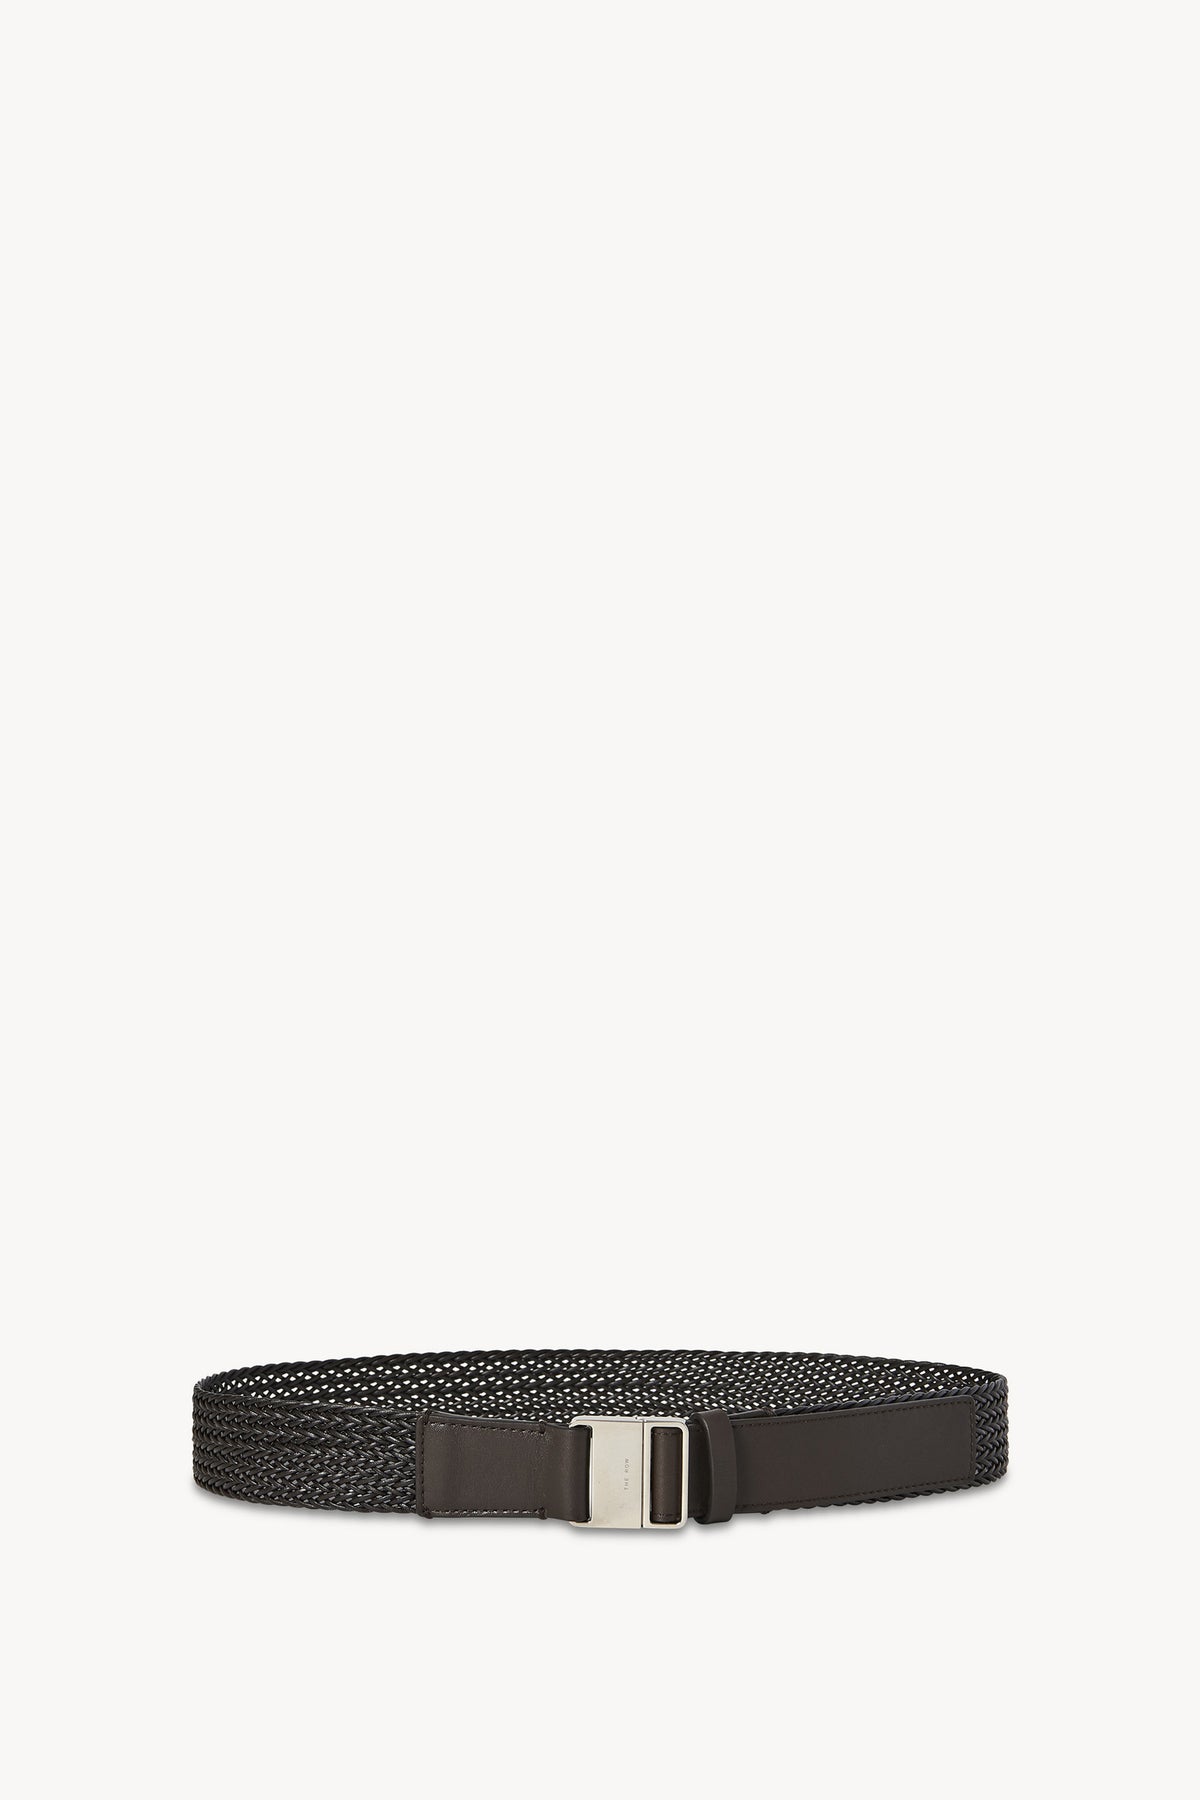 Leo Woven Belt in Leather